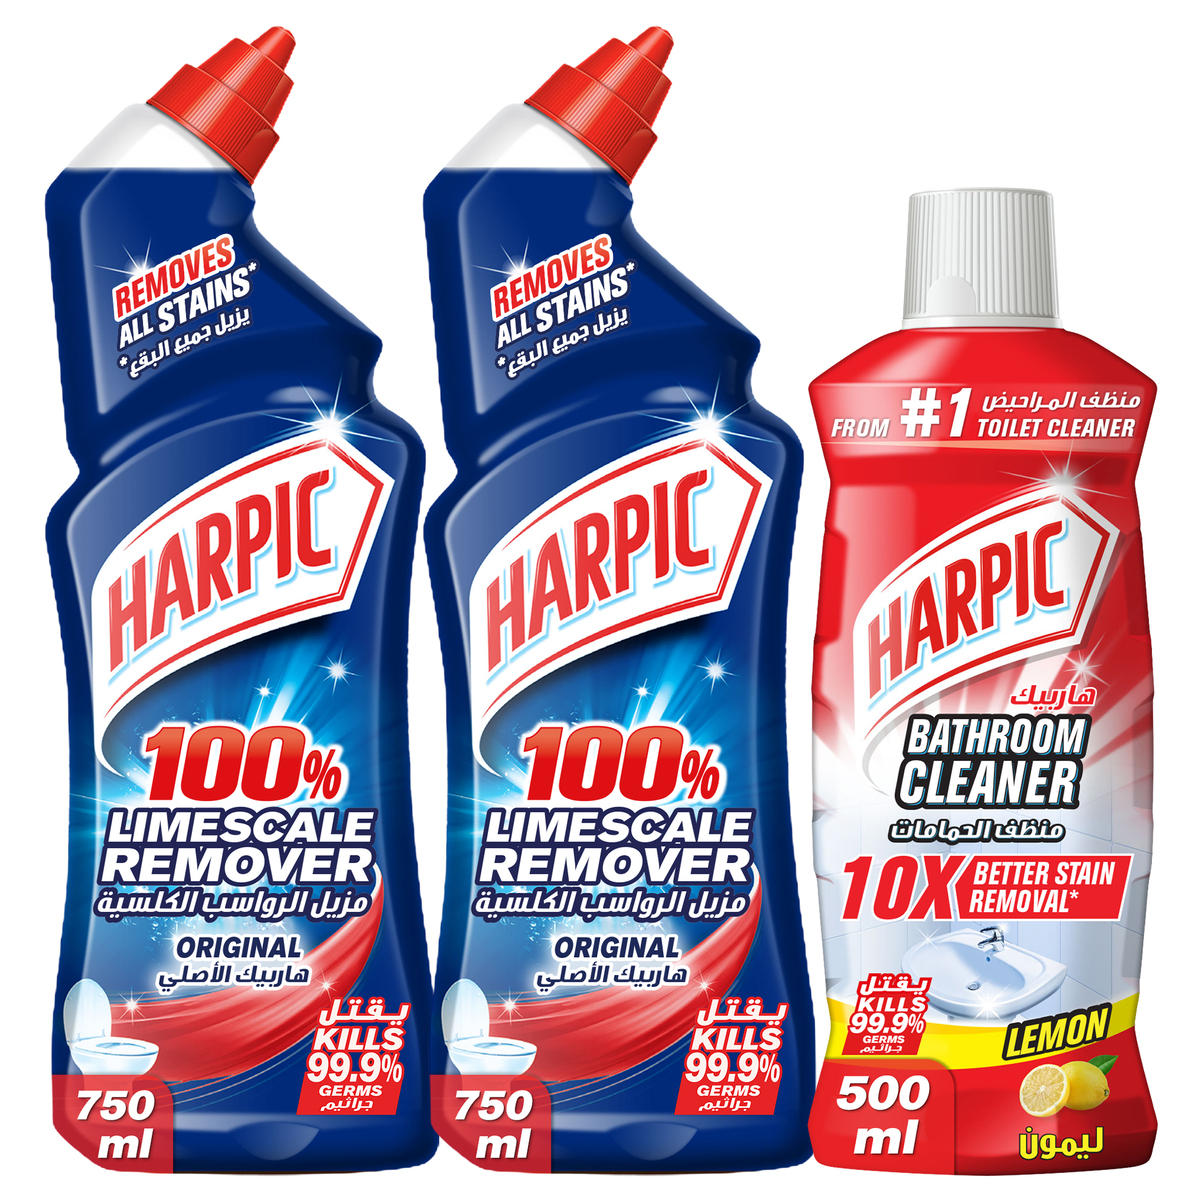 Harpic ,bathroom Cleaner.